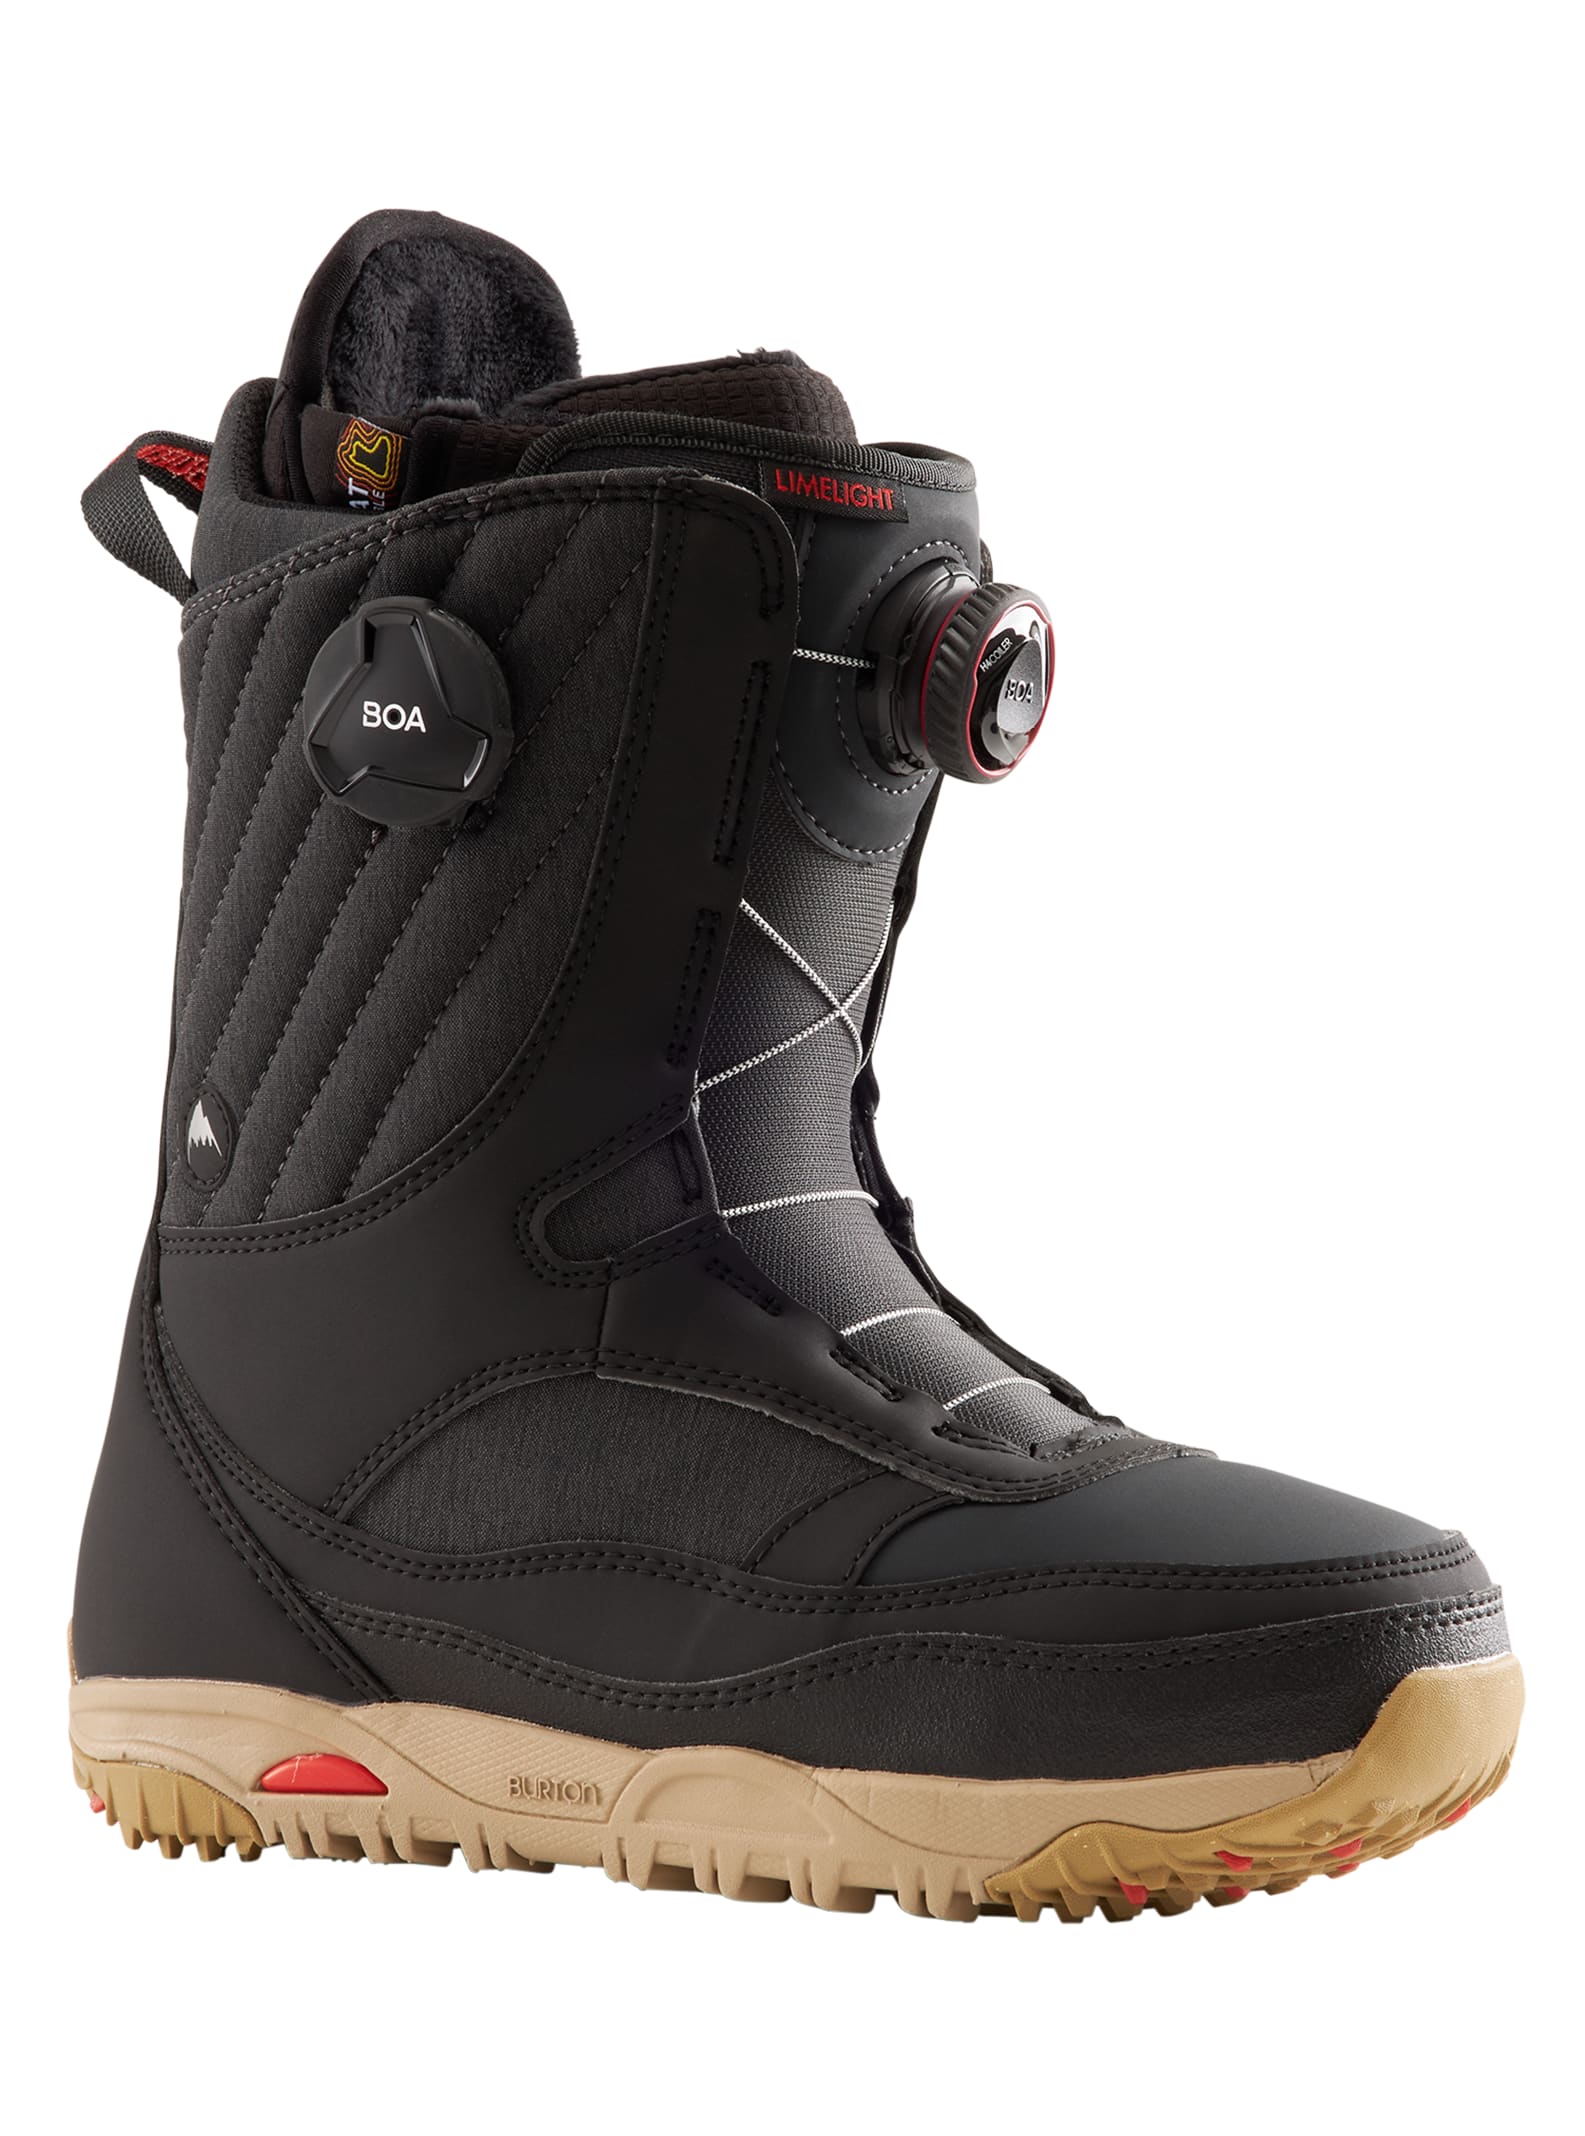 Women's Snowboarding Sale | Boots, Boards, Bindings | Burton.com US